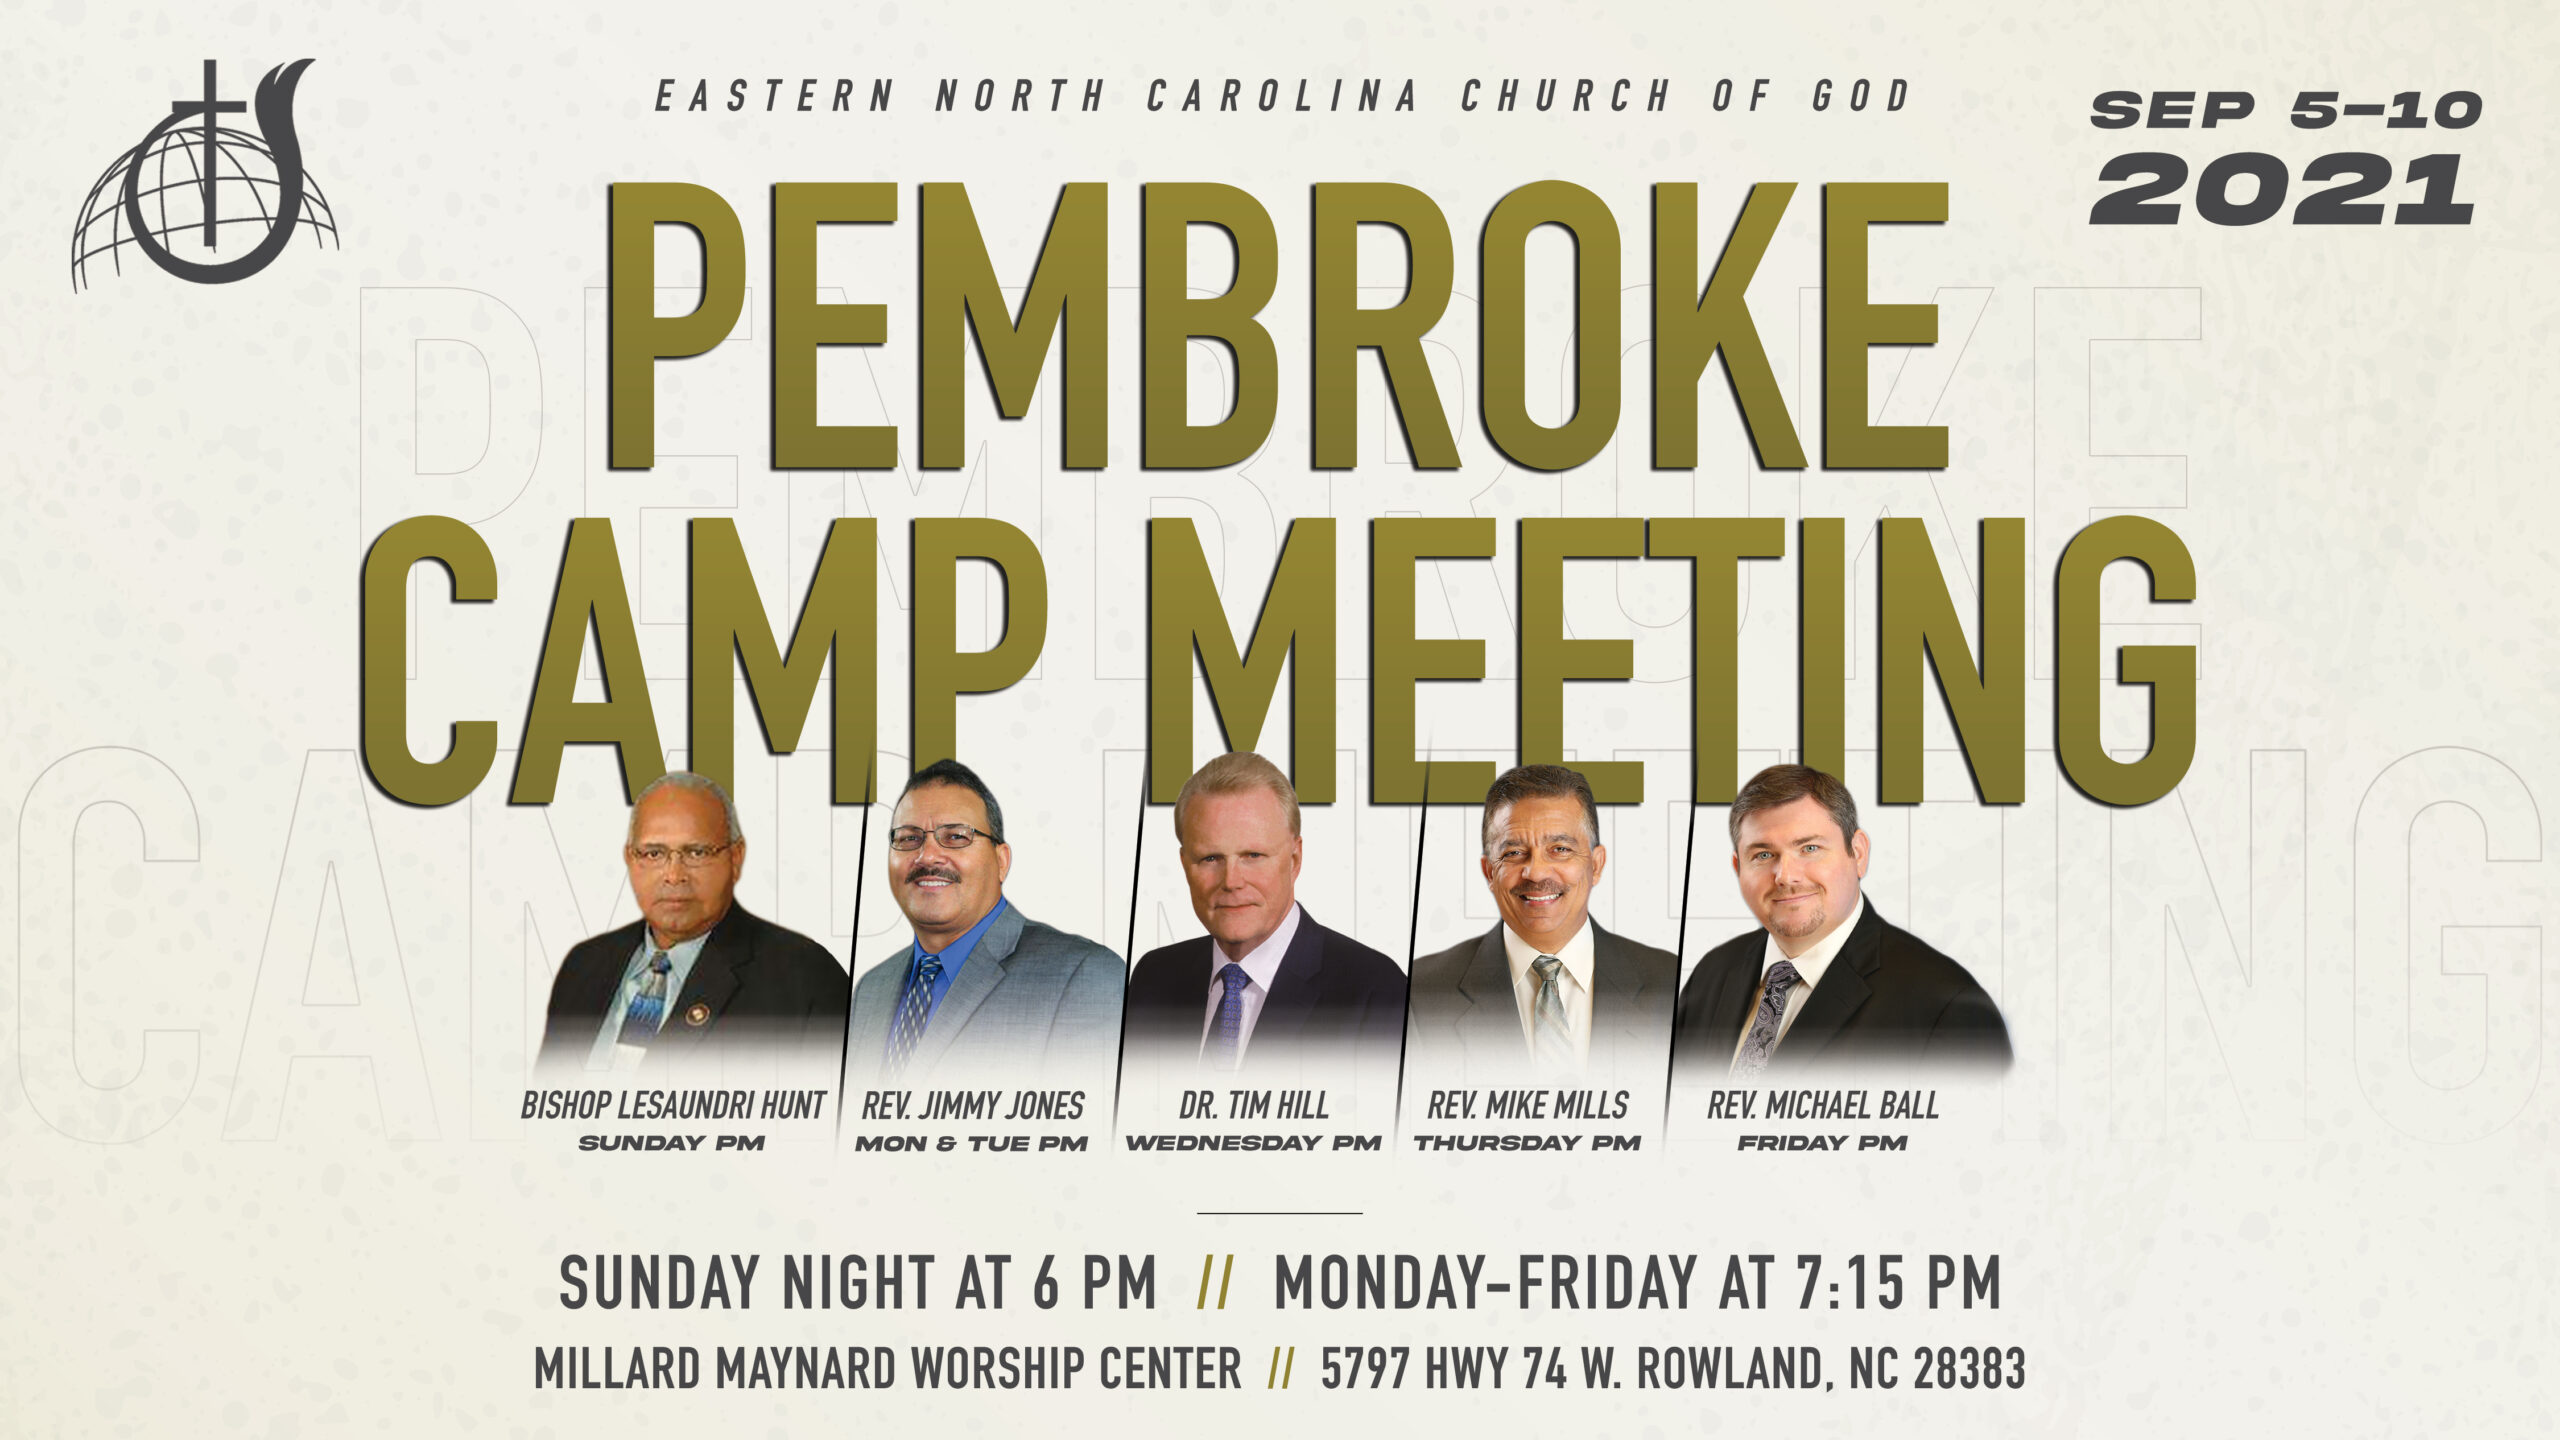 2021 Pembroke Camp Meeting Eastern North Carolina Church of God